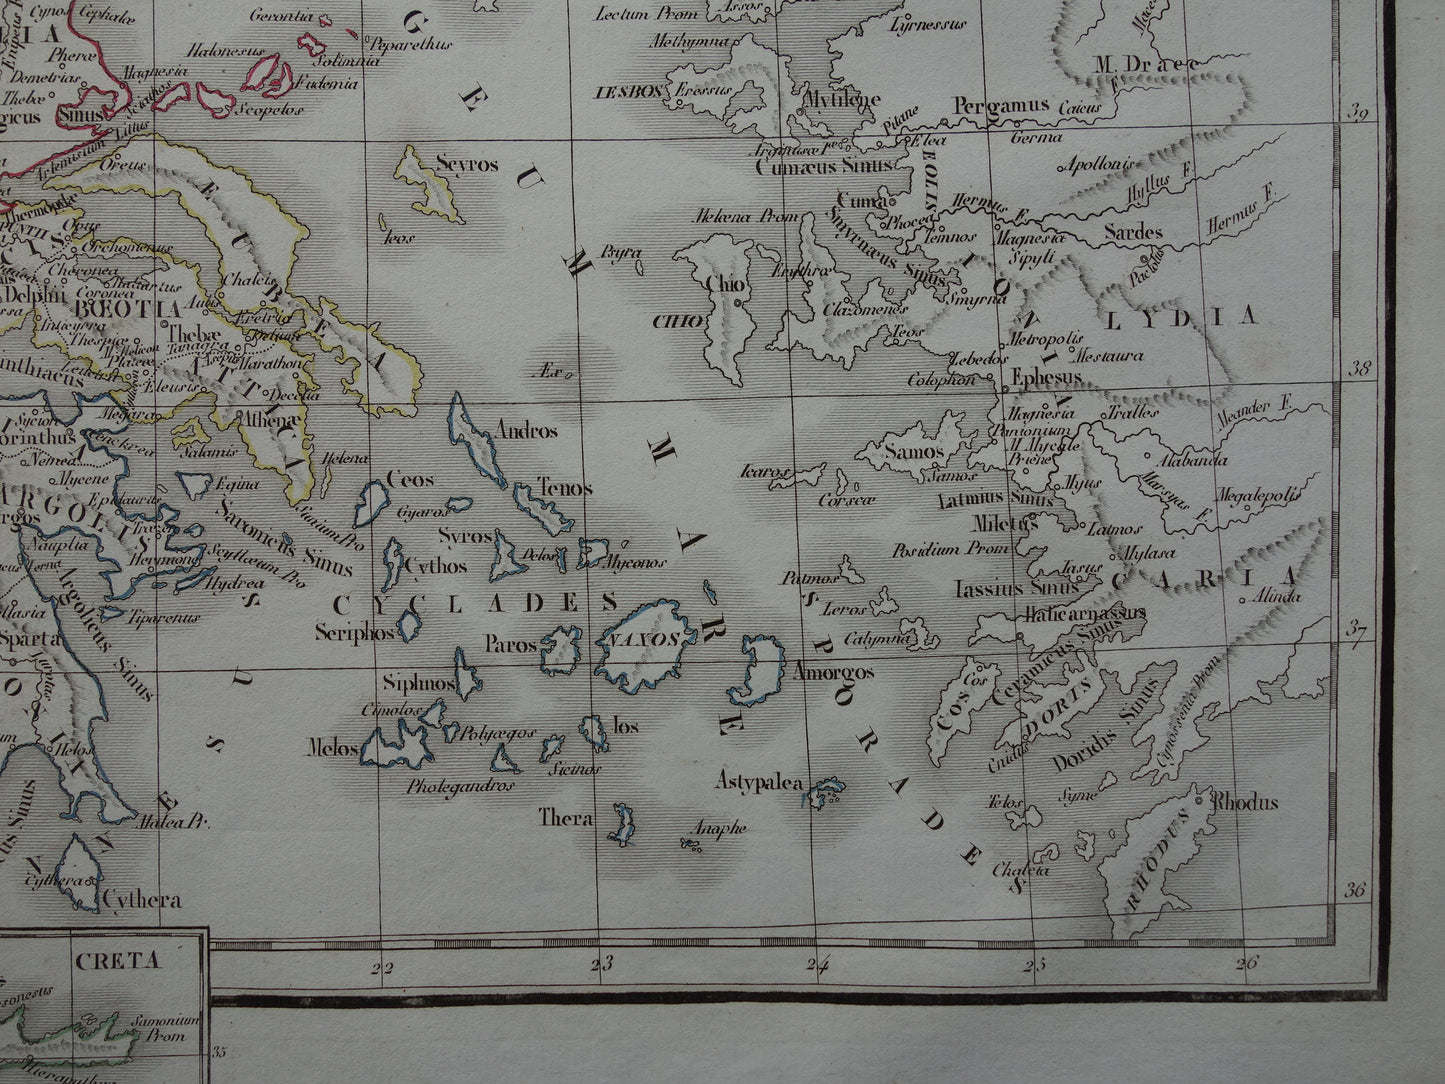 GRIEKENLAND grote oude landkaart van Griekenland in de klassieke oudheid originele antieke kaart uit 1832